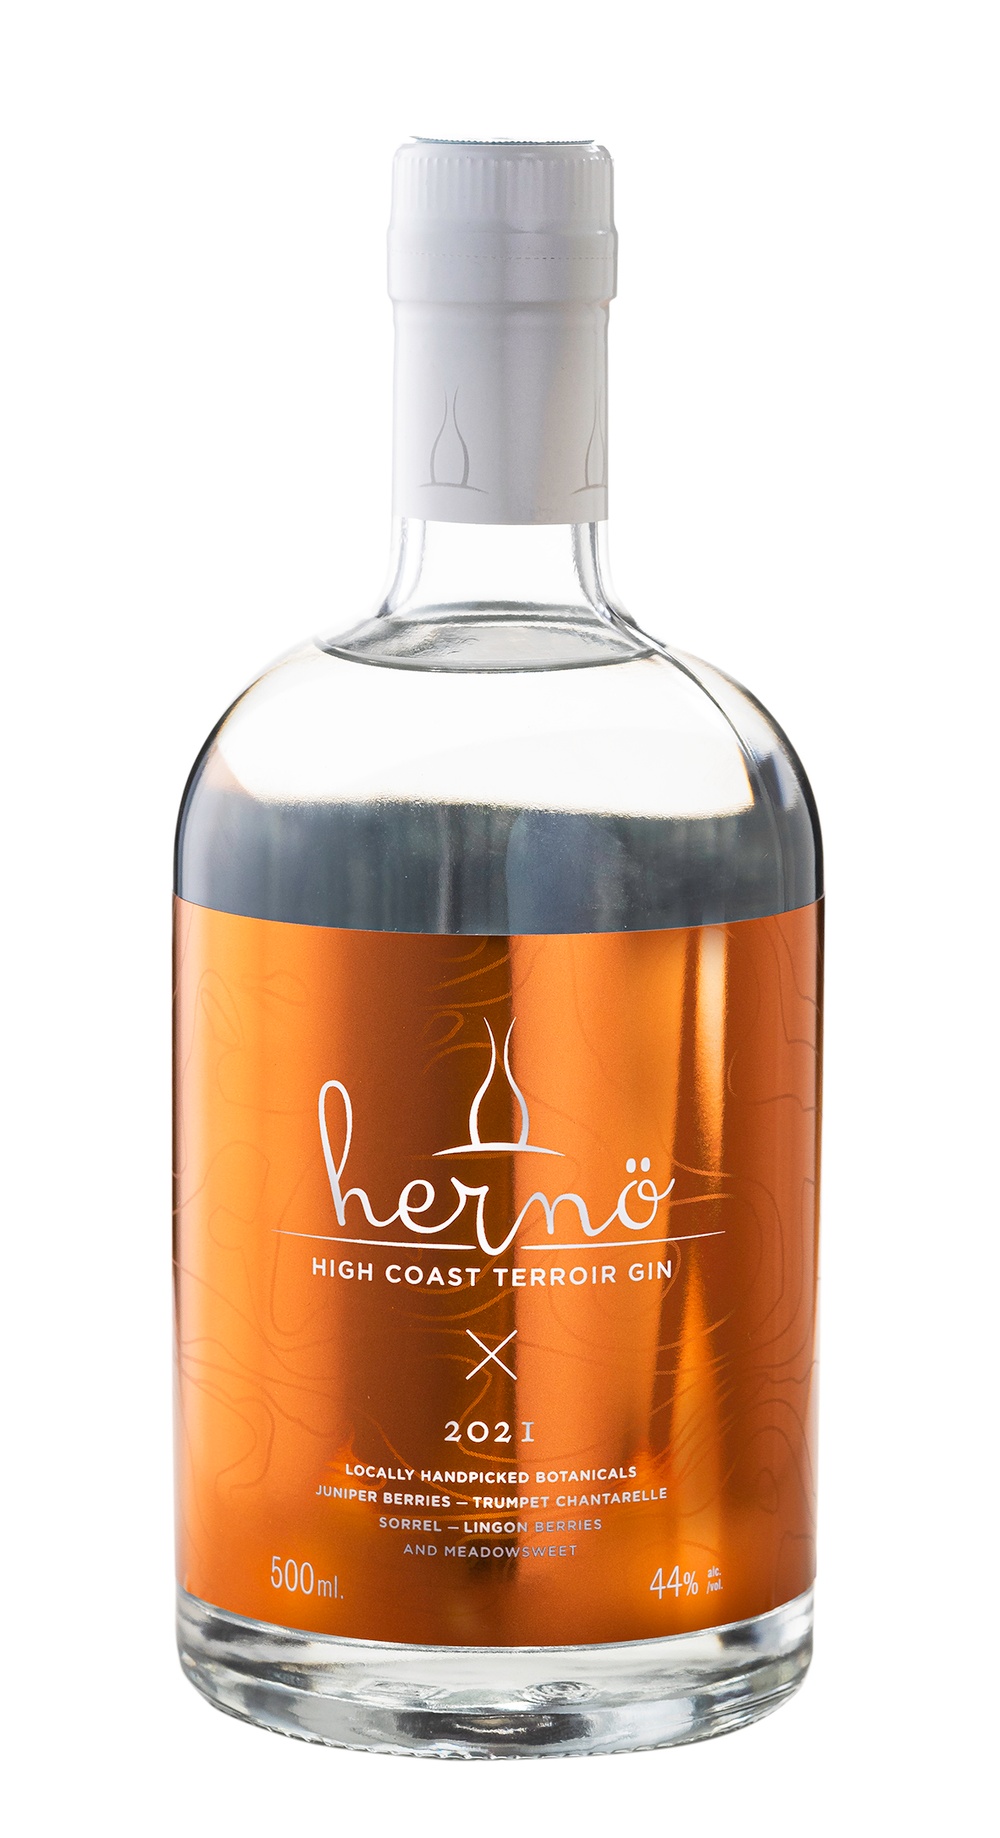 2021, Hernö High Coast Terroir Gin. 846 bottles, 44% ABV. Sold out.